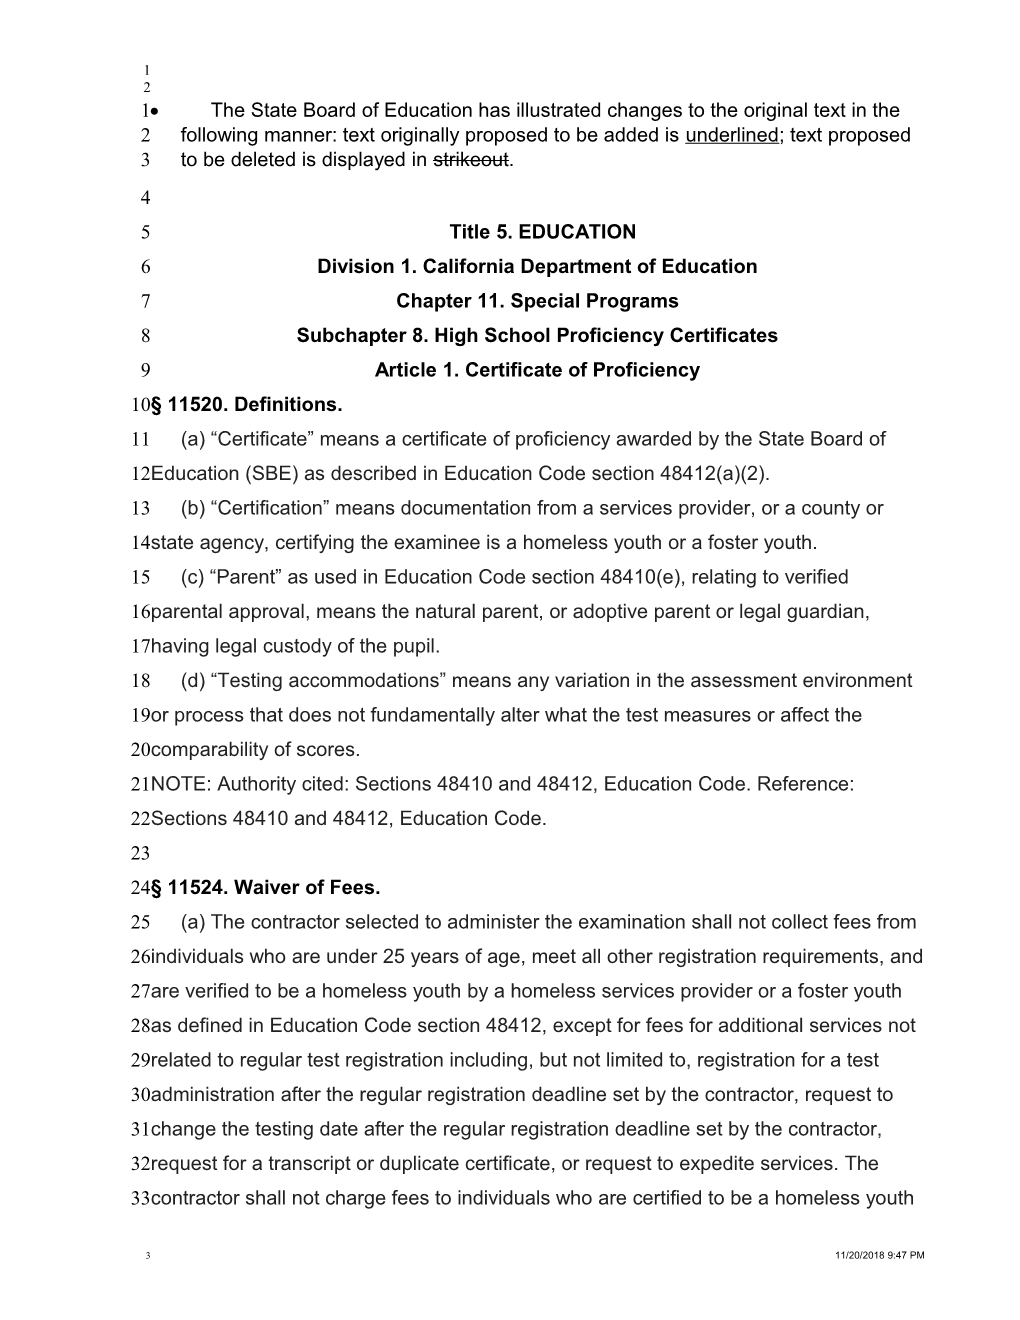 CHSPE 1St Emergency Regulations Readopt - Laws & Regulations (CA Dept of Education)